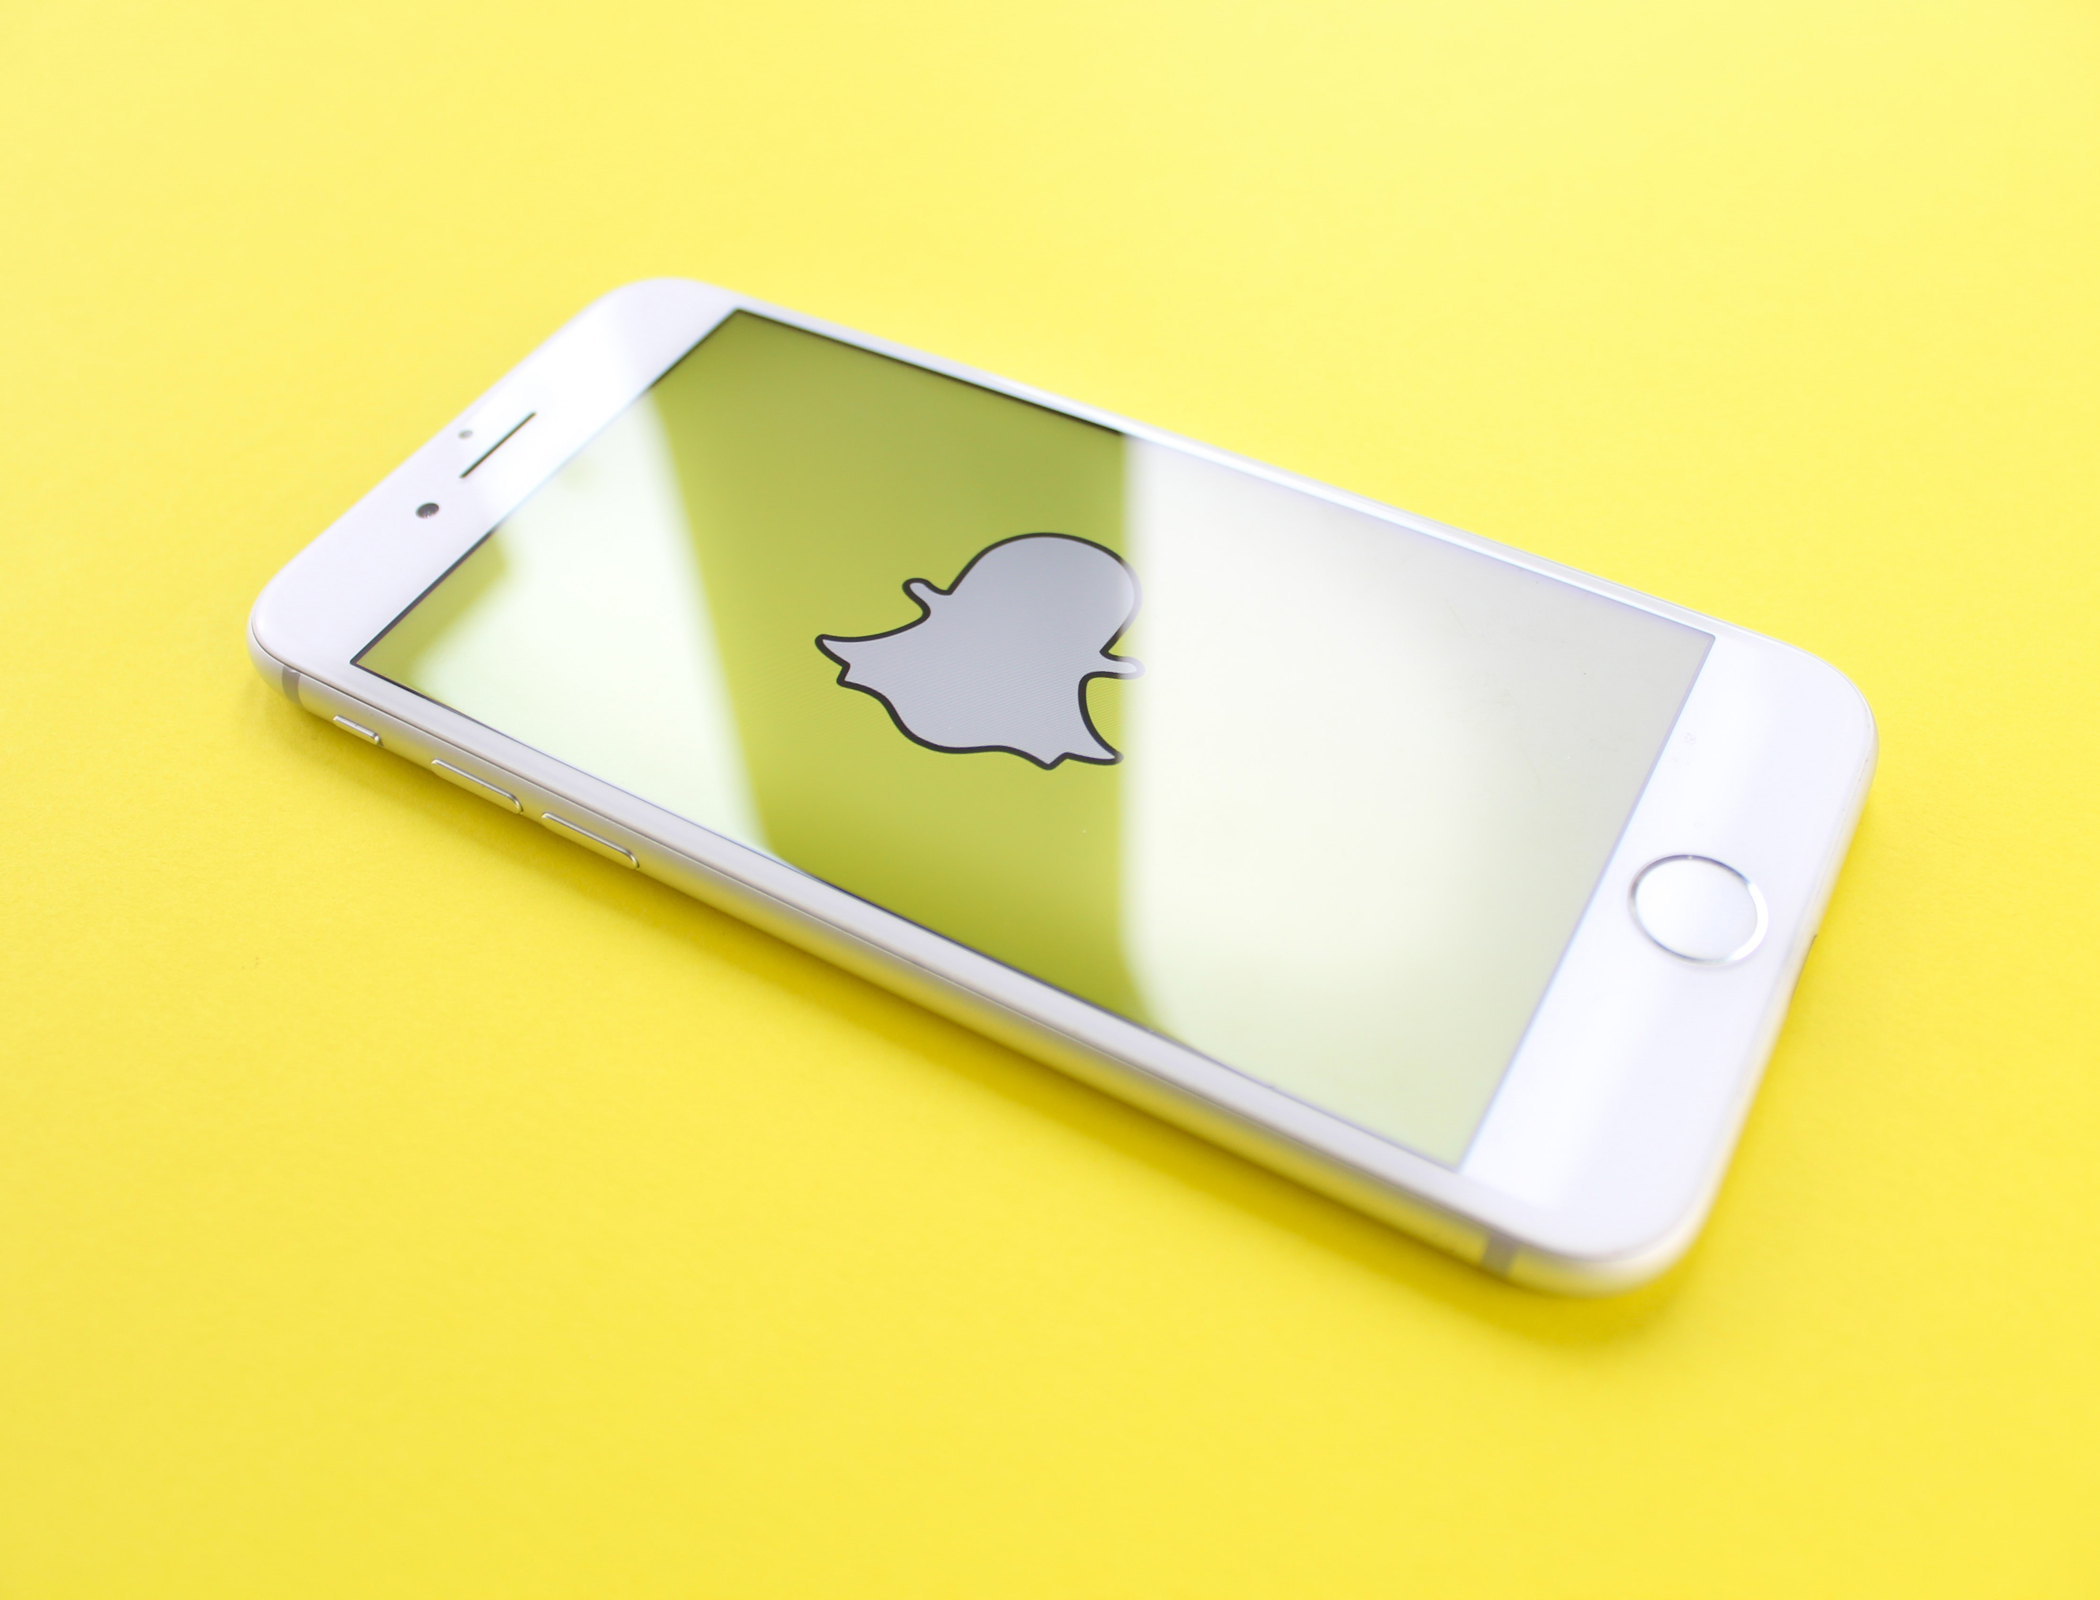 UK investigates Snapchat AI chatbot over privacy risks